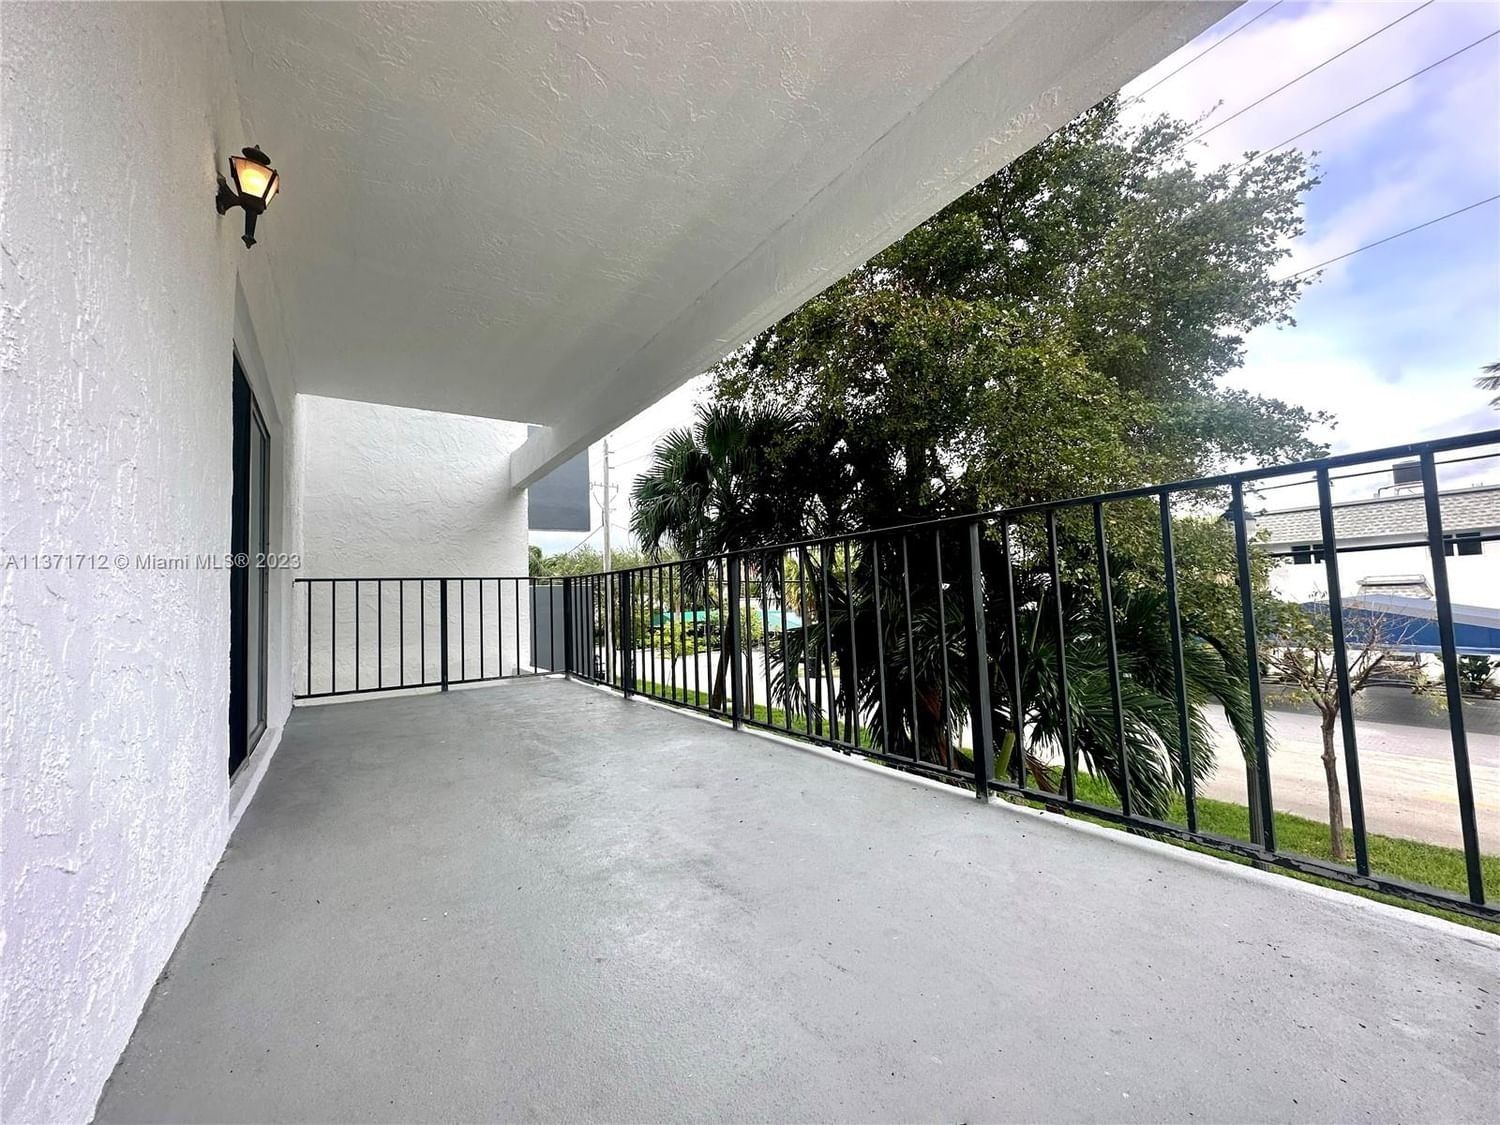 Real estate property located at 16508 26th Ave #205, Miami-Dade County, North Miami Beach, FL